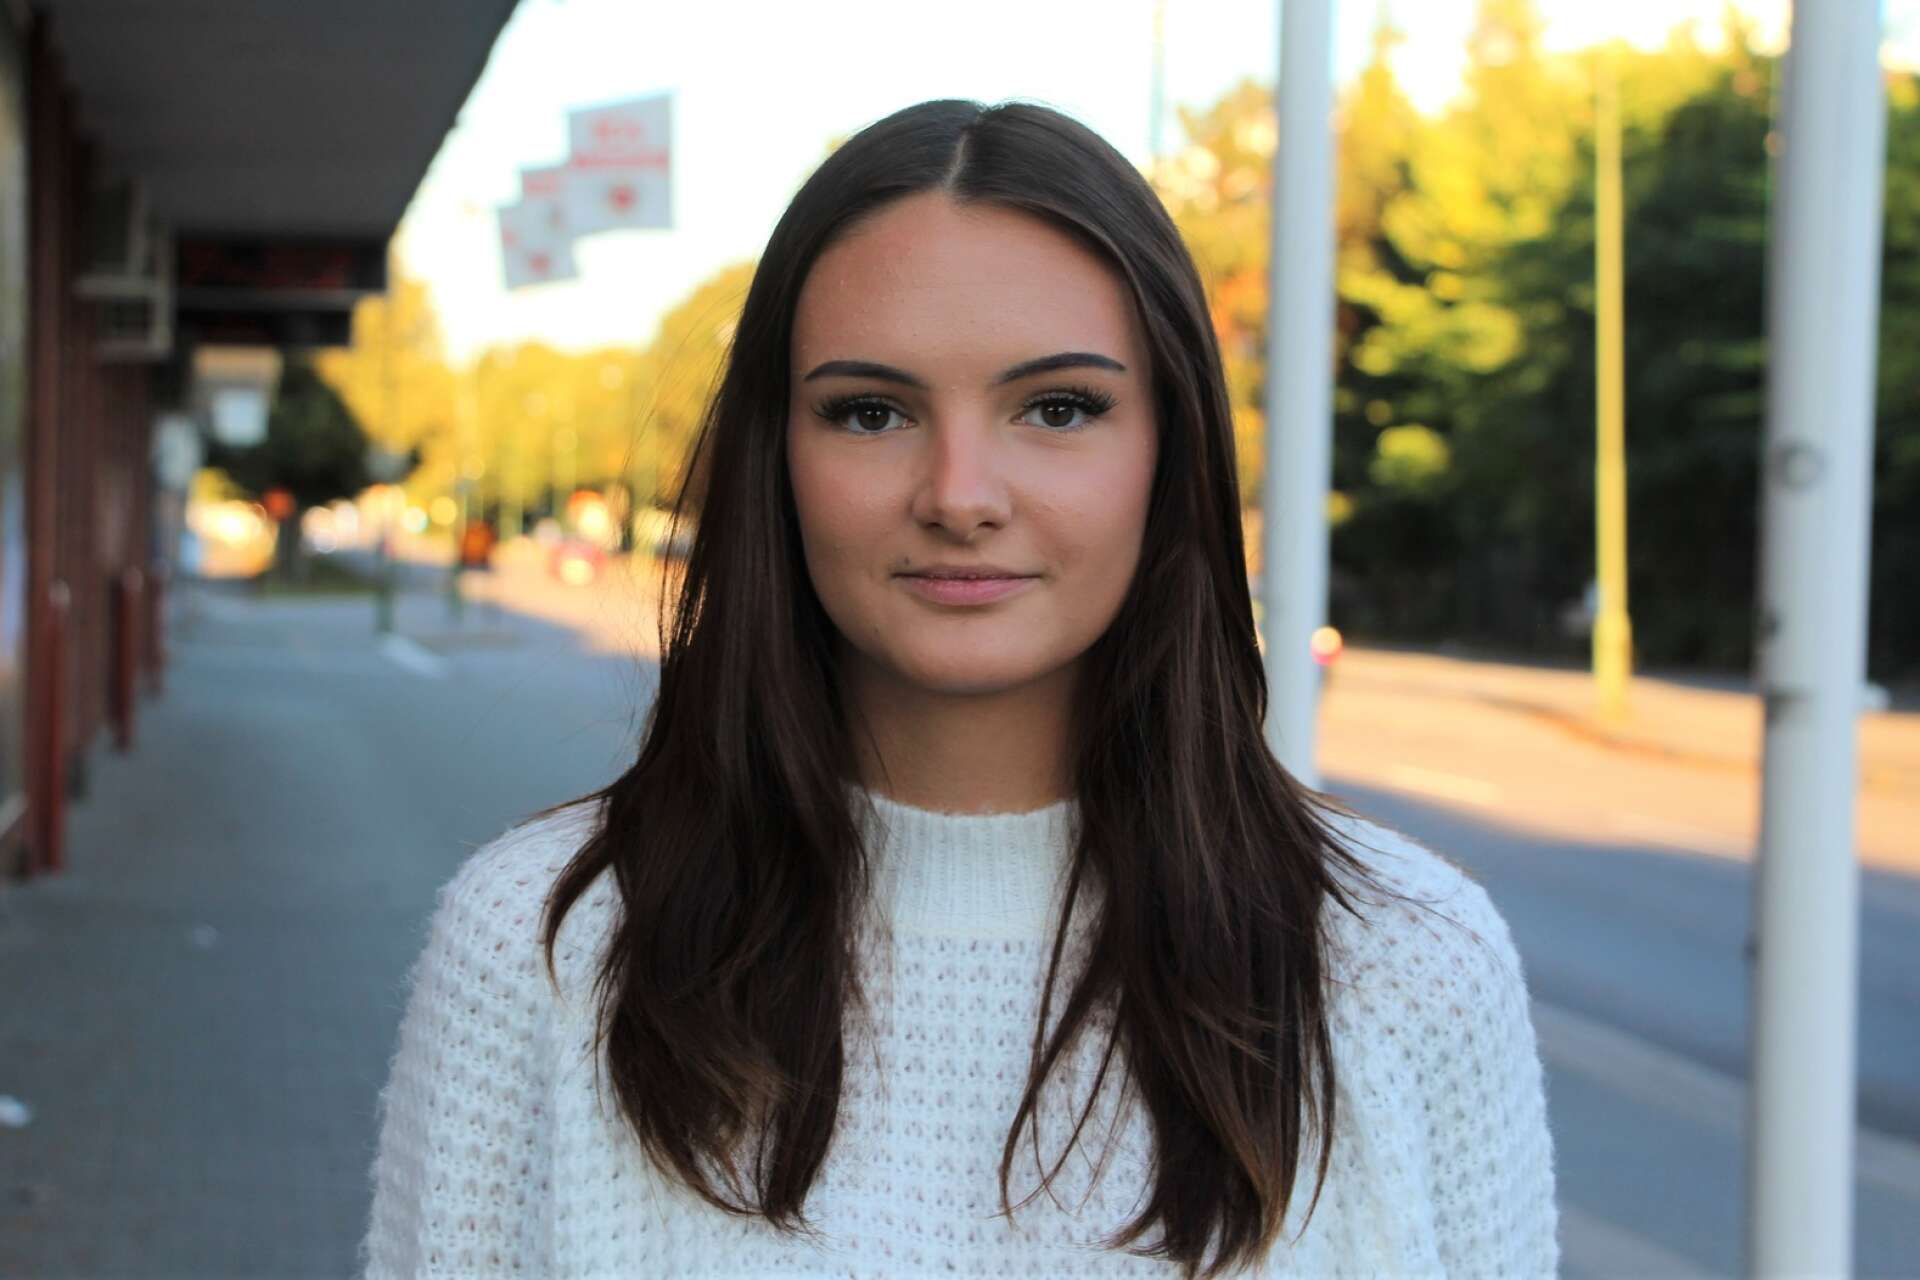 Nellie Lundberg, 18, Töreboda